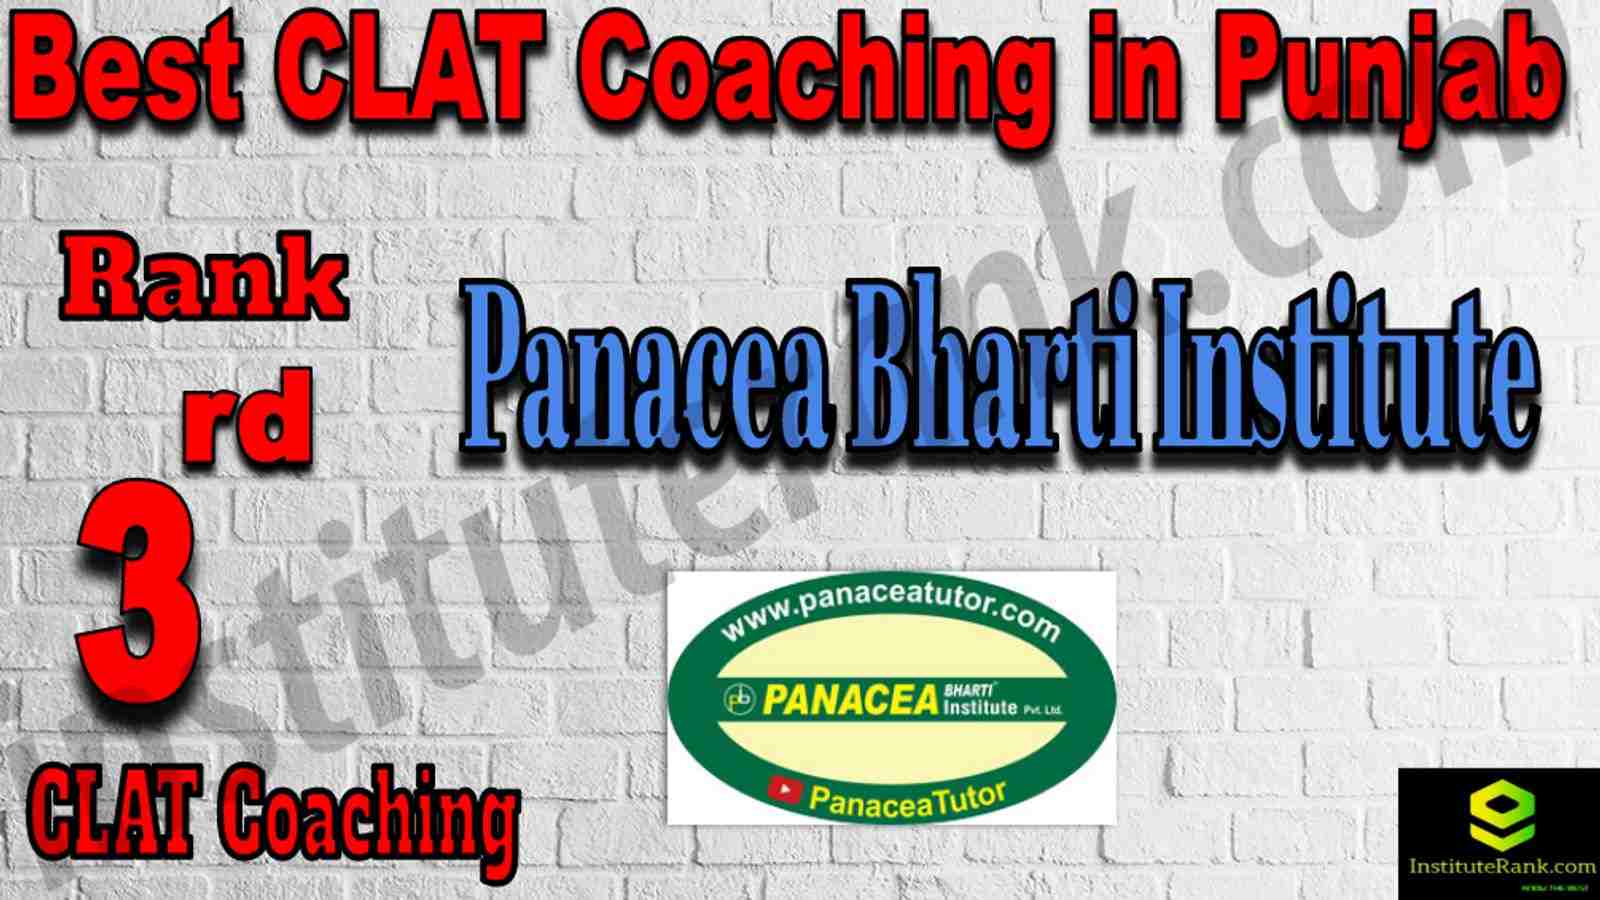 3rd Best Clat Coaching in Punjab